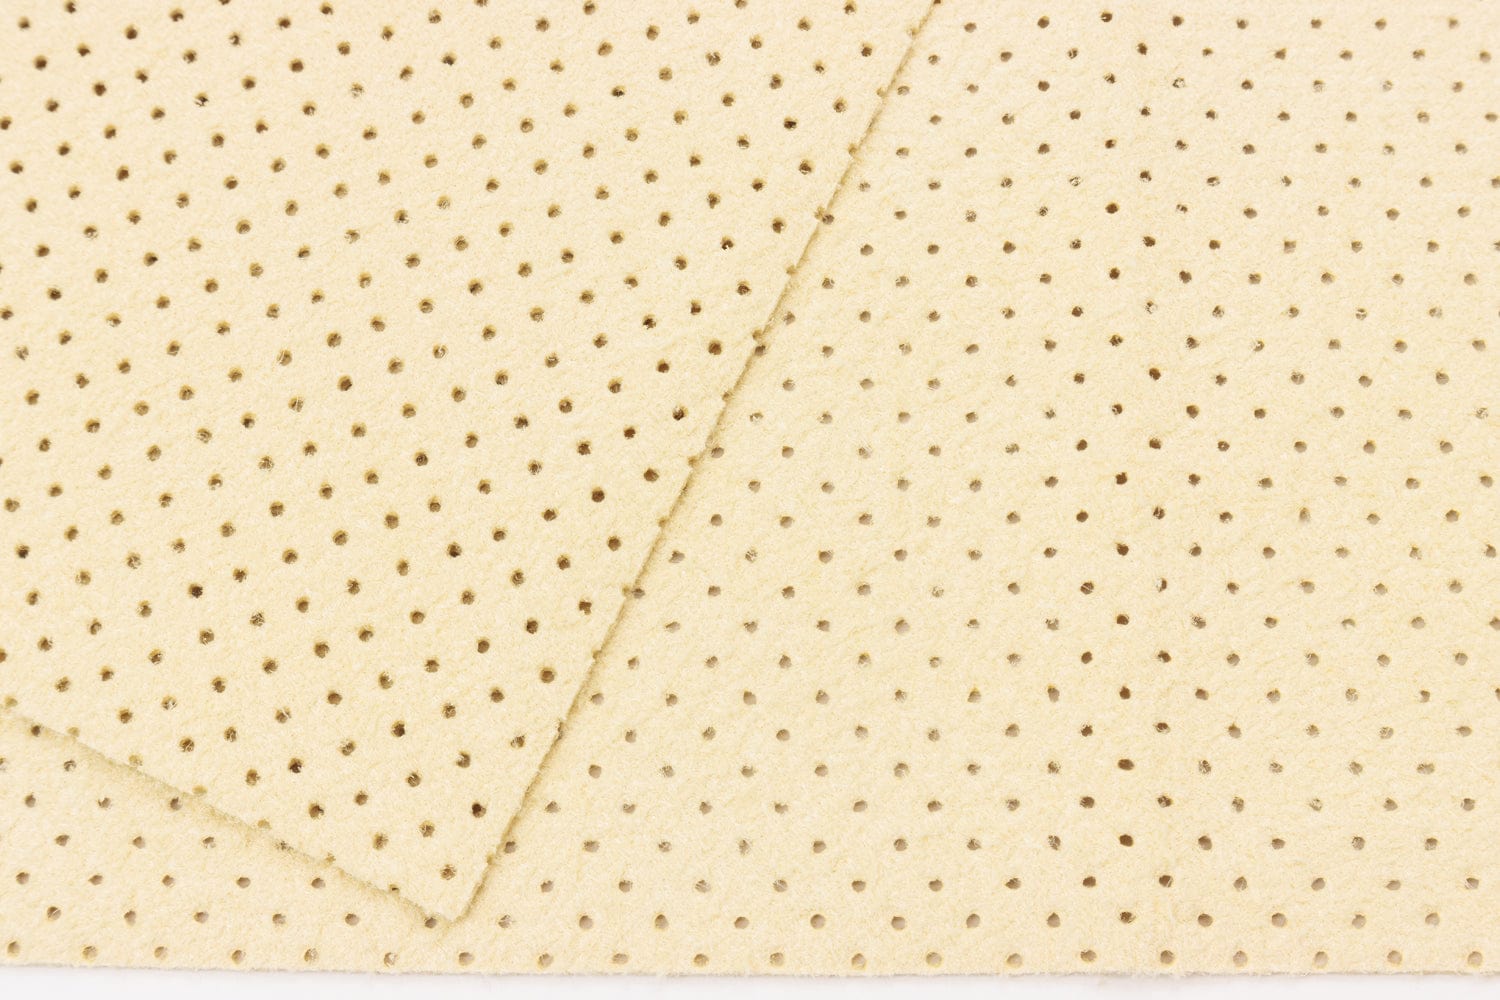 Autofiber Towel FULL CASE [Holey Shammy] Perforated Synthetic Microfiber Chamois - 20"x30"- 90/ case